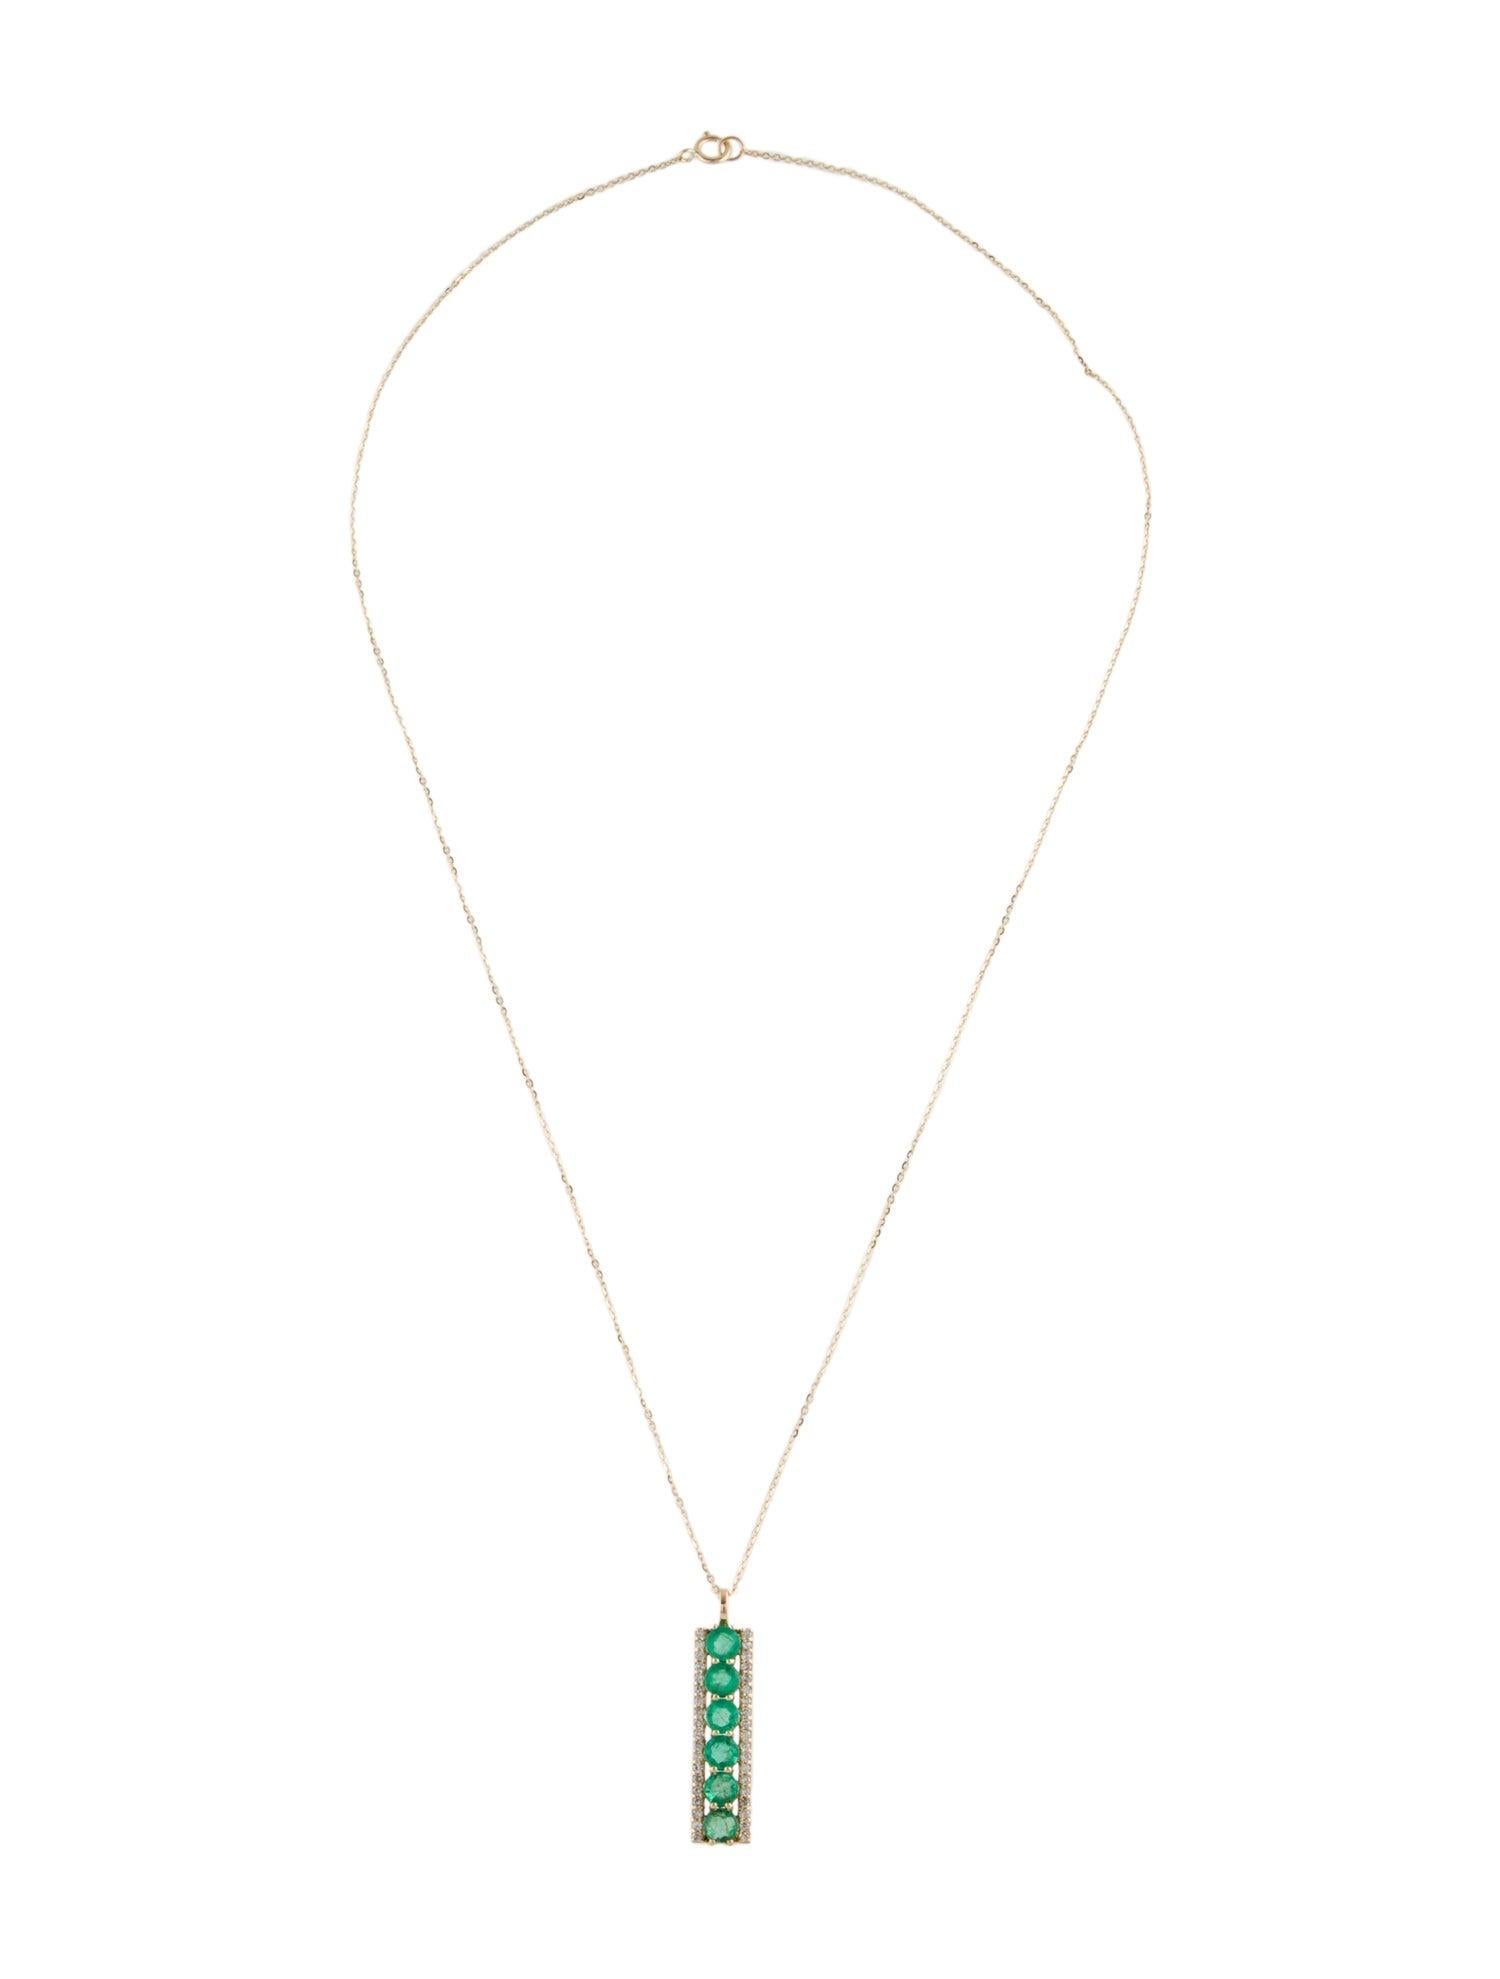 Brilliant Cut 14K 1.45ctw Emerald & Diamond Pendant Necklace: Exquisite Statement Jewelry For Sale